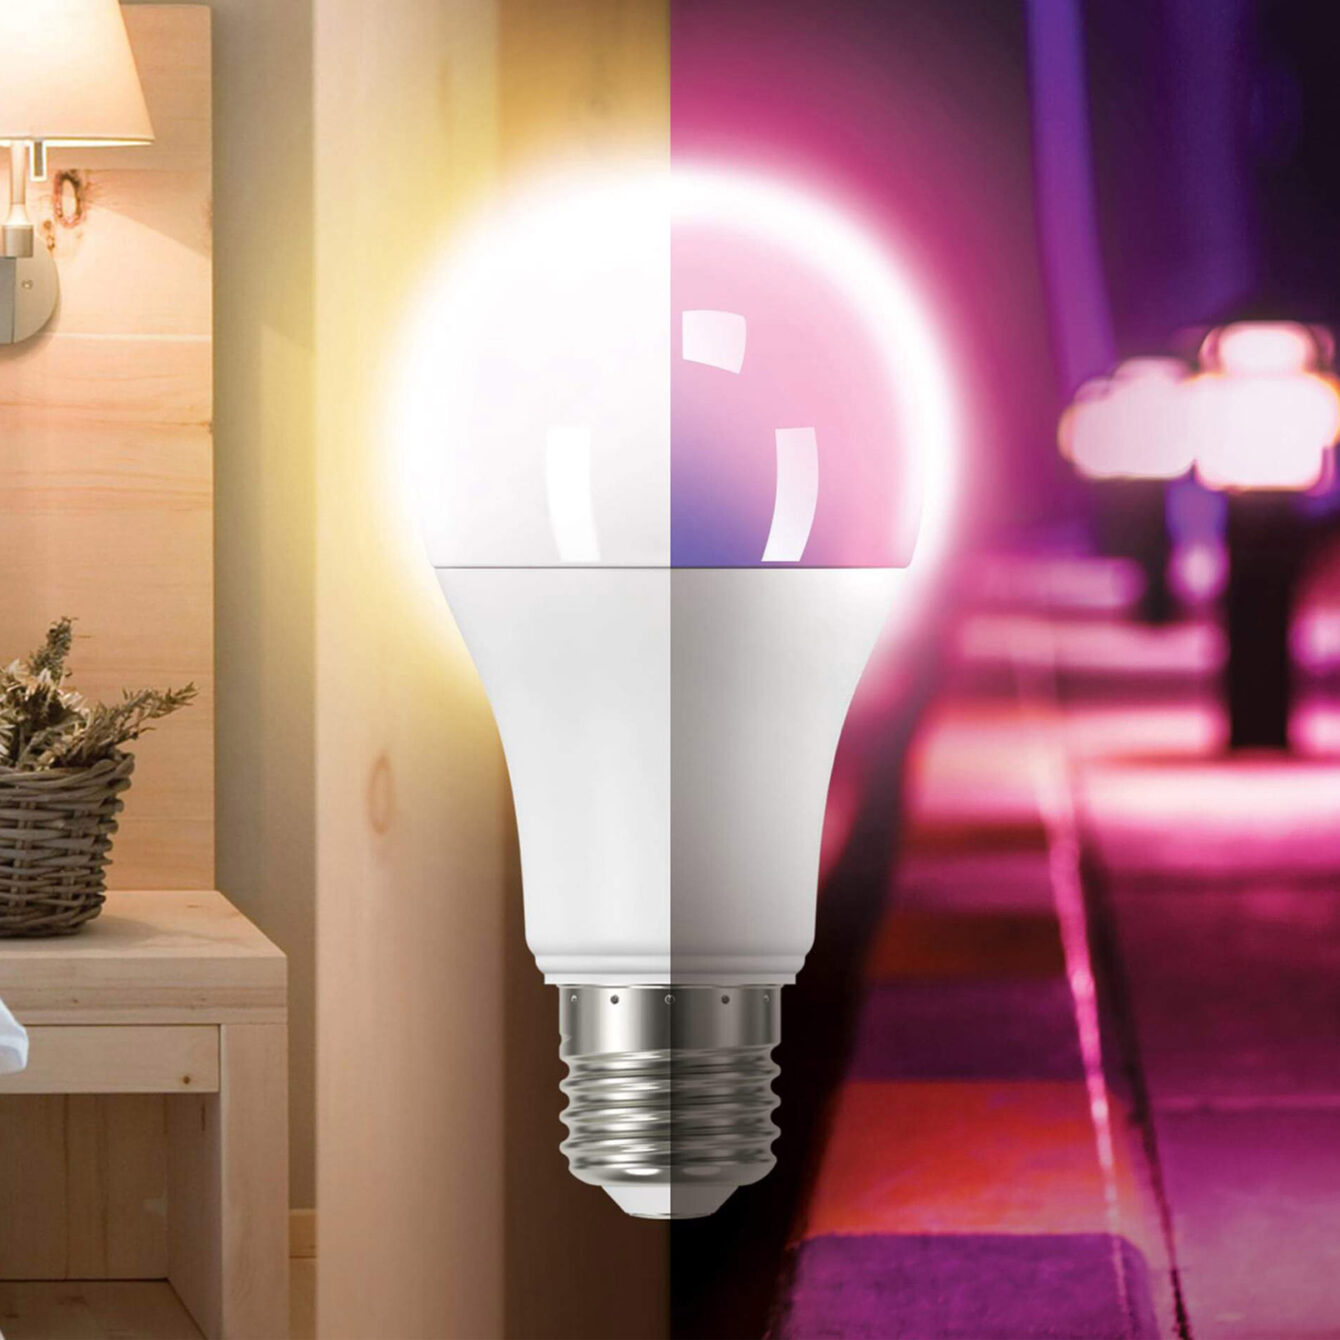 LED Bulb 6 - Intelligente, dimmbare Glühbirne von Aeotec | Radiamo